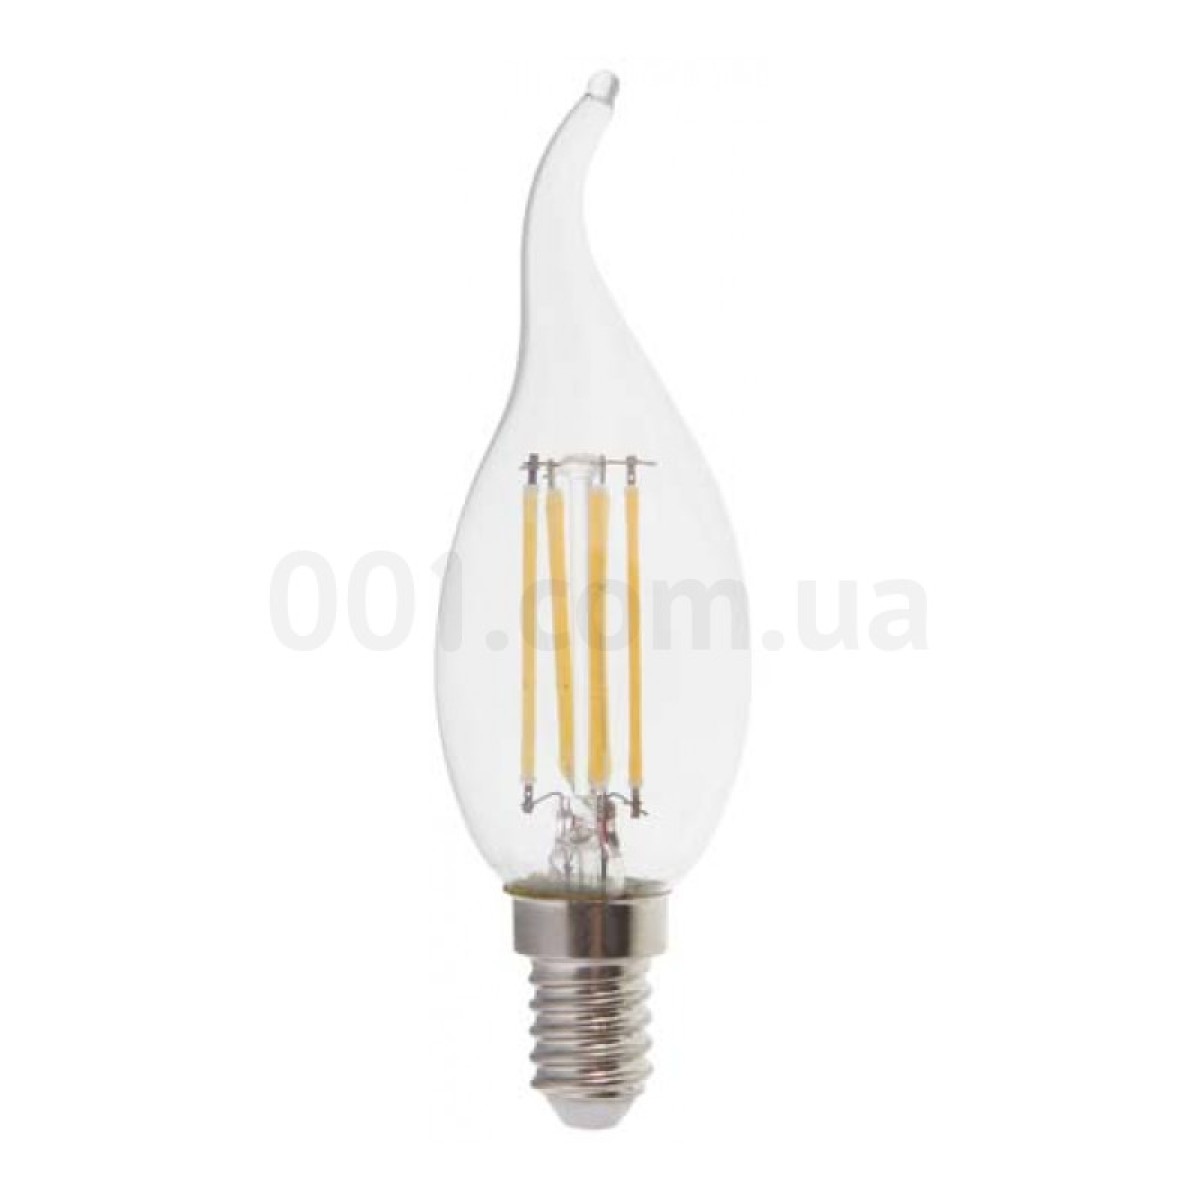 Светодиодная лампа LB-59 CF37 (свеча на ветру) филамент 4Вт 4000K E14, Feron 98_98.jpg